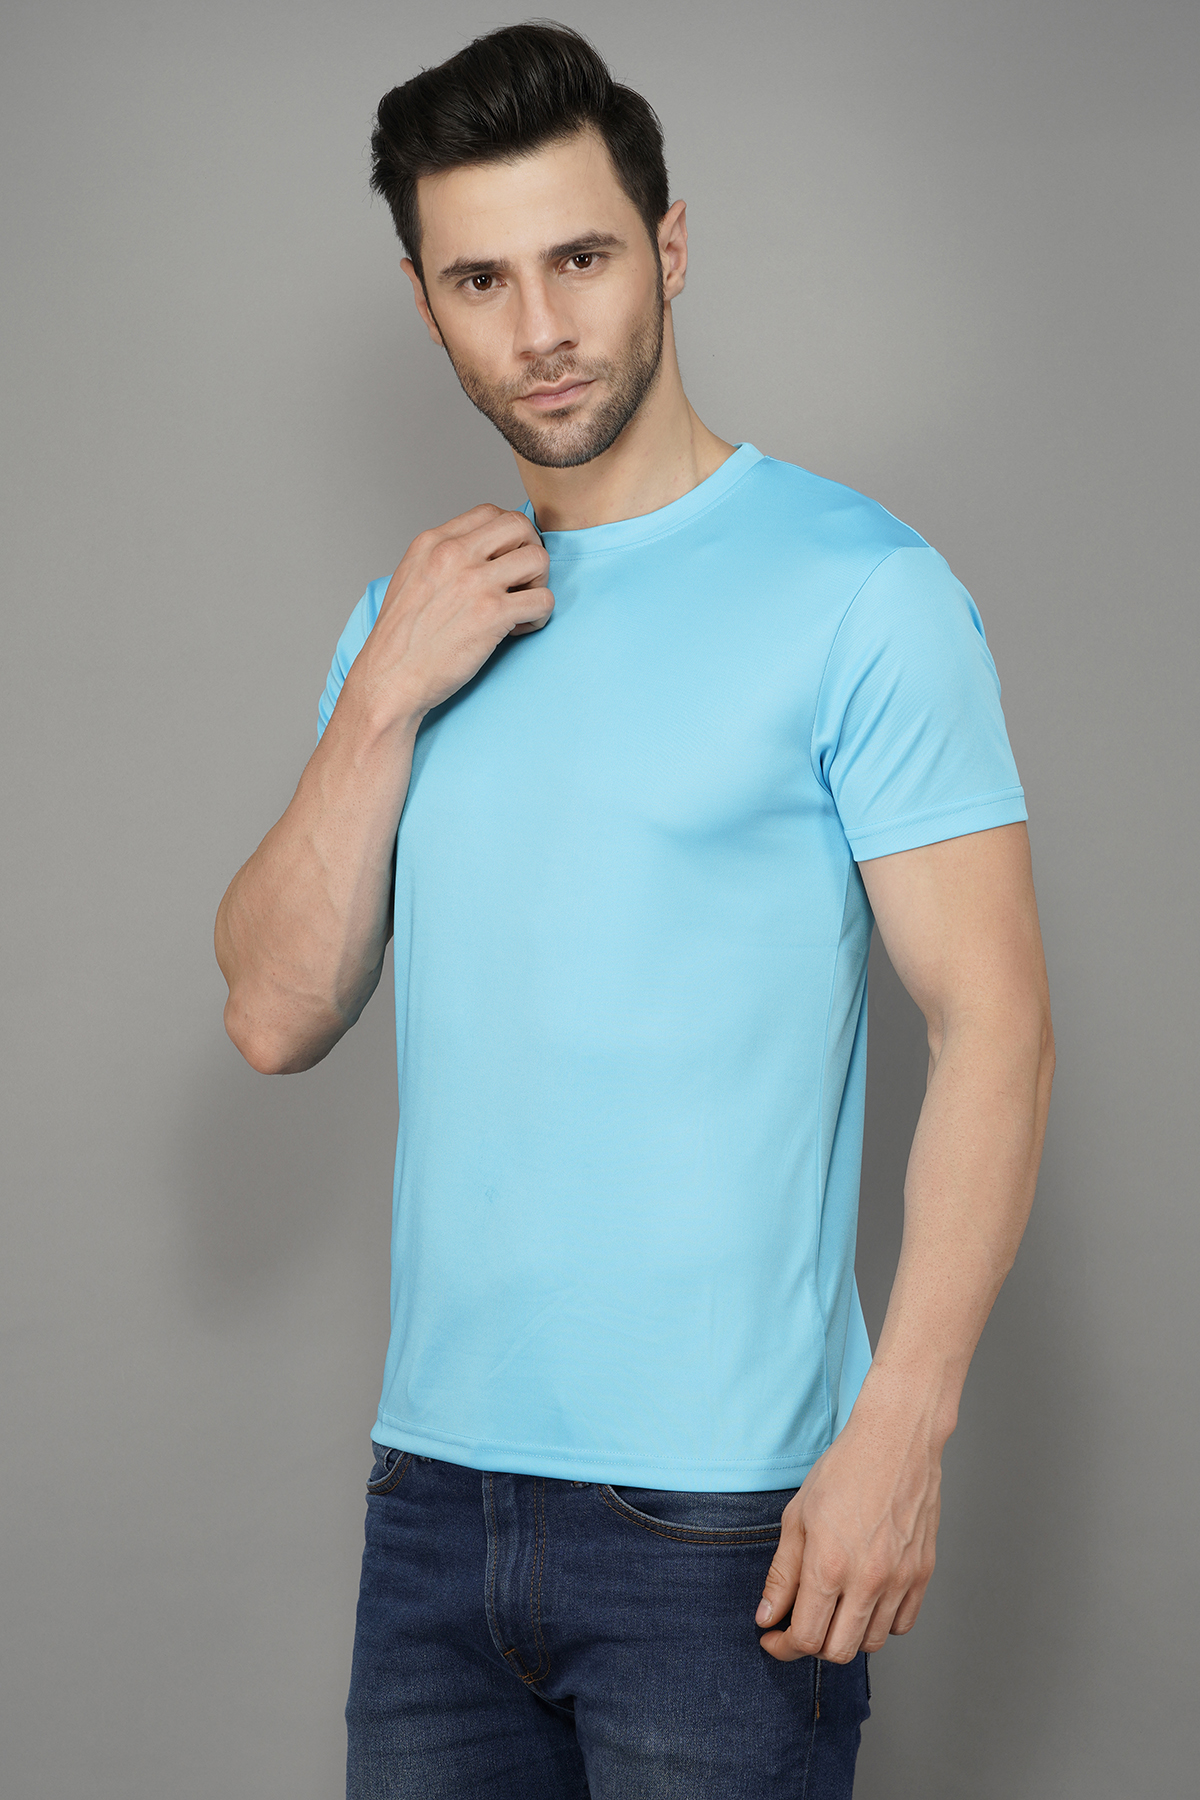 Men's Half Sleeve Neon Blue Sports Active Wear T-shirt